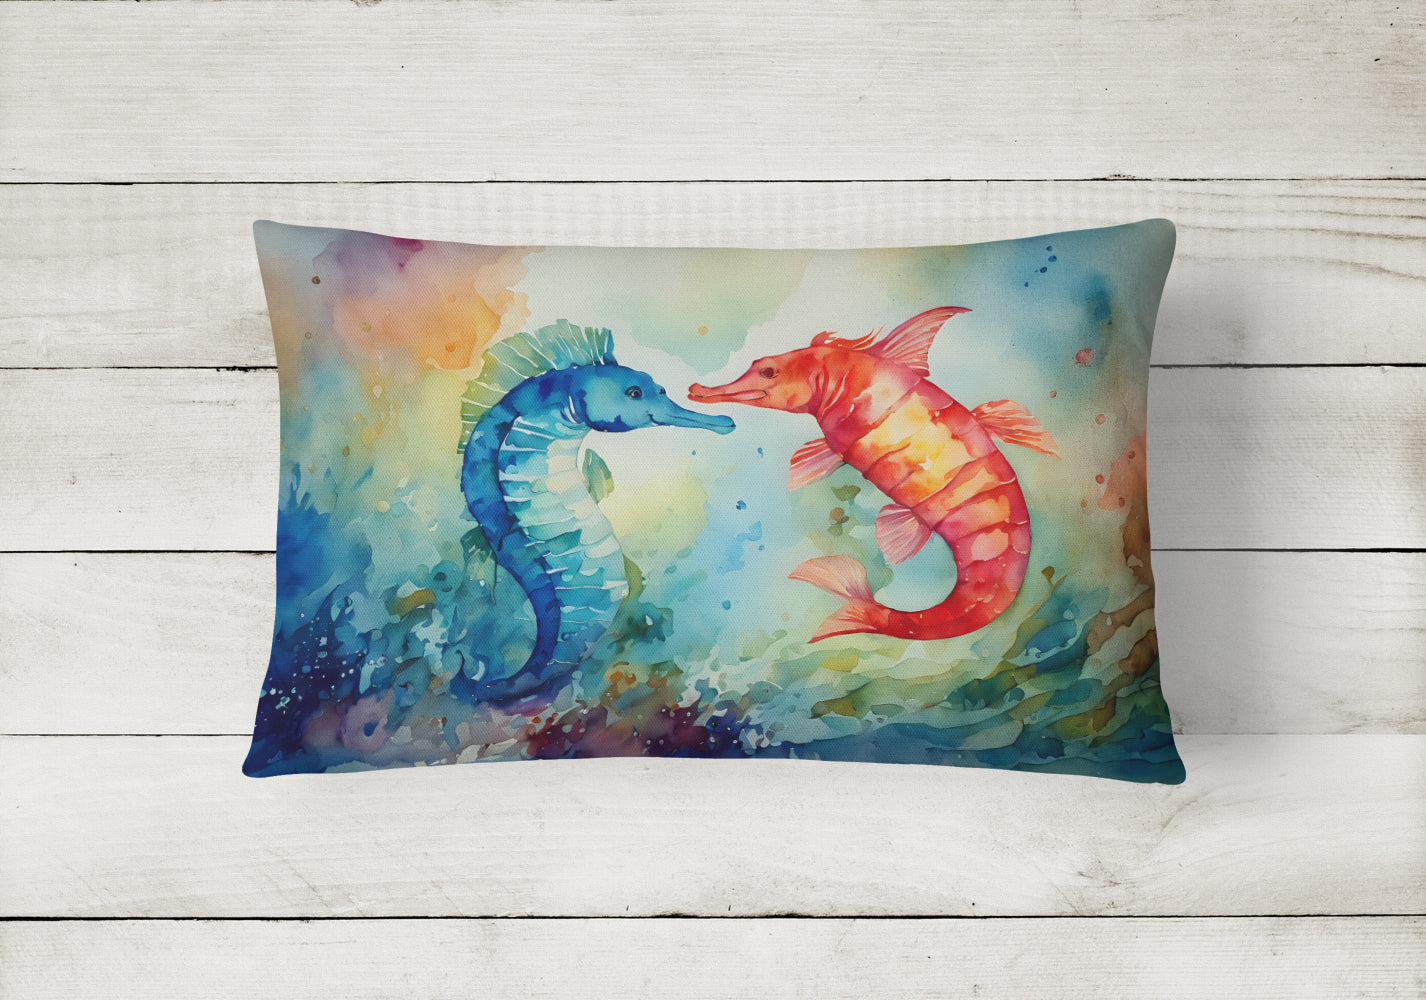 Buy this Seahorses Throw Pillow